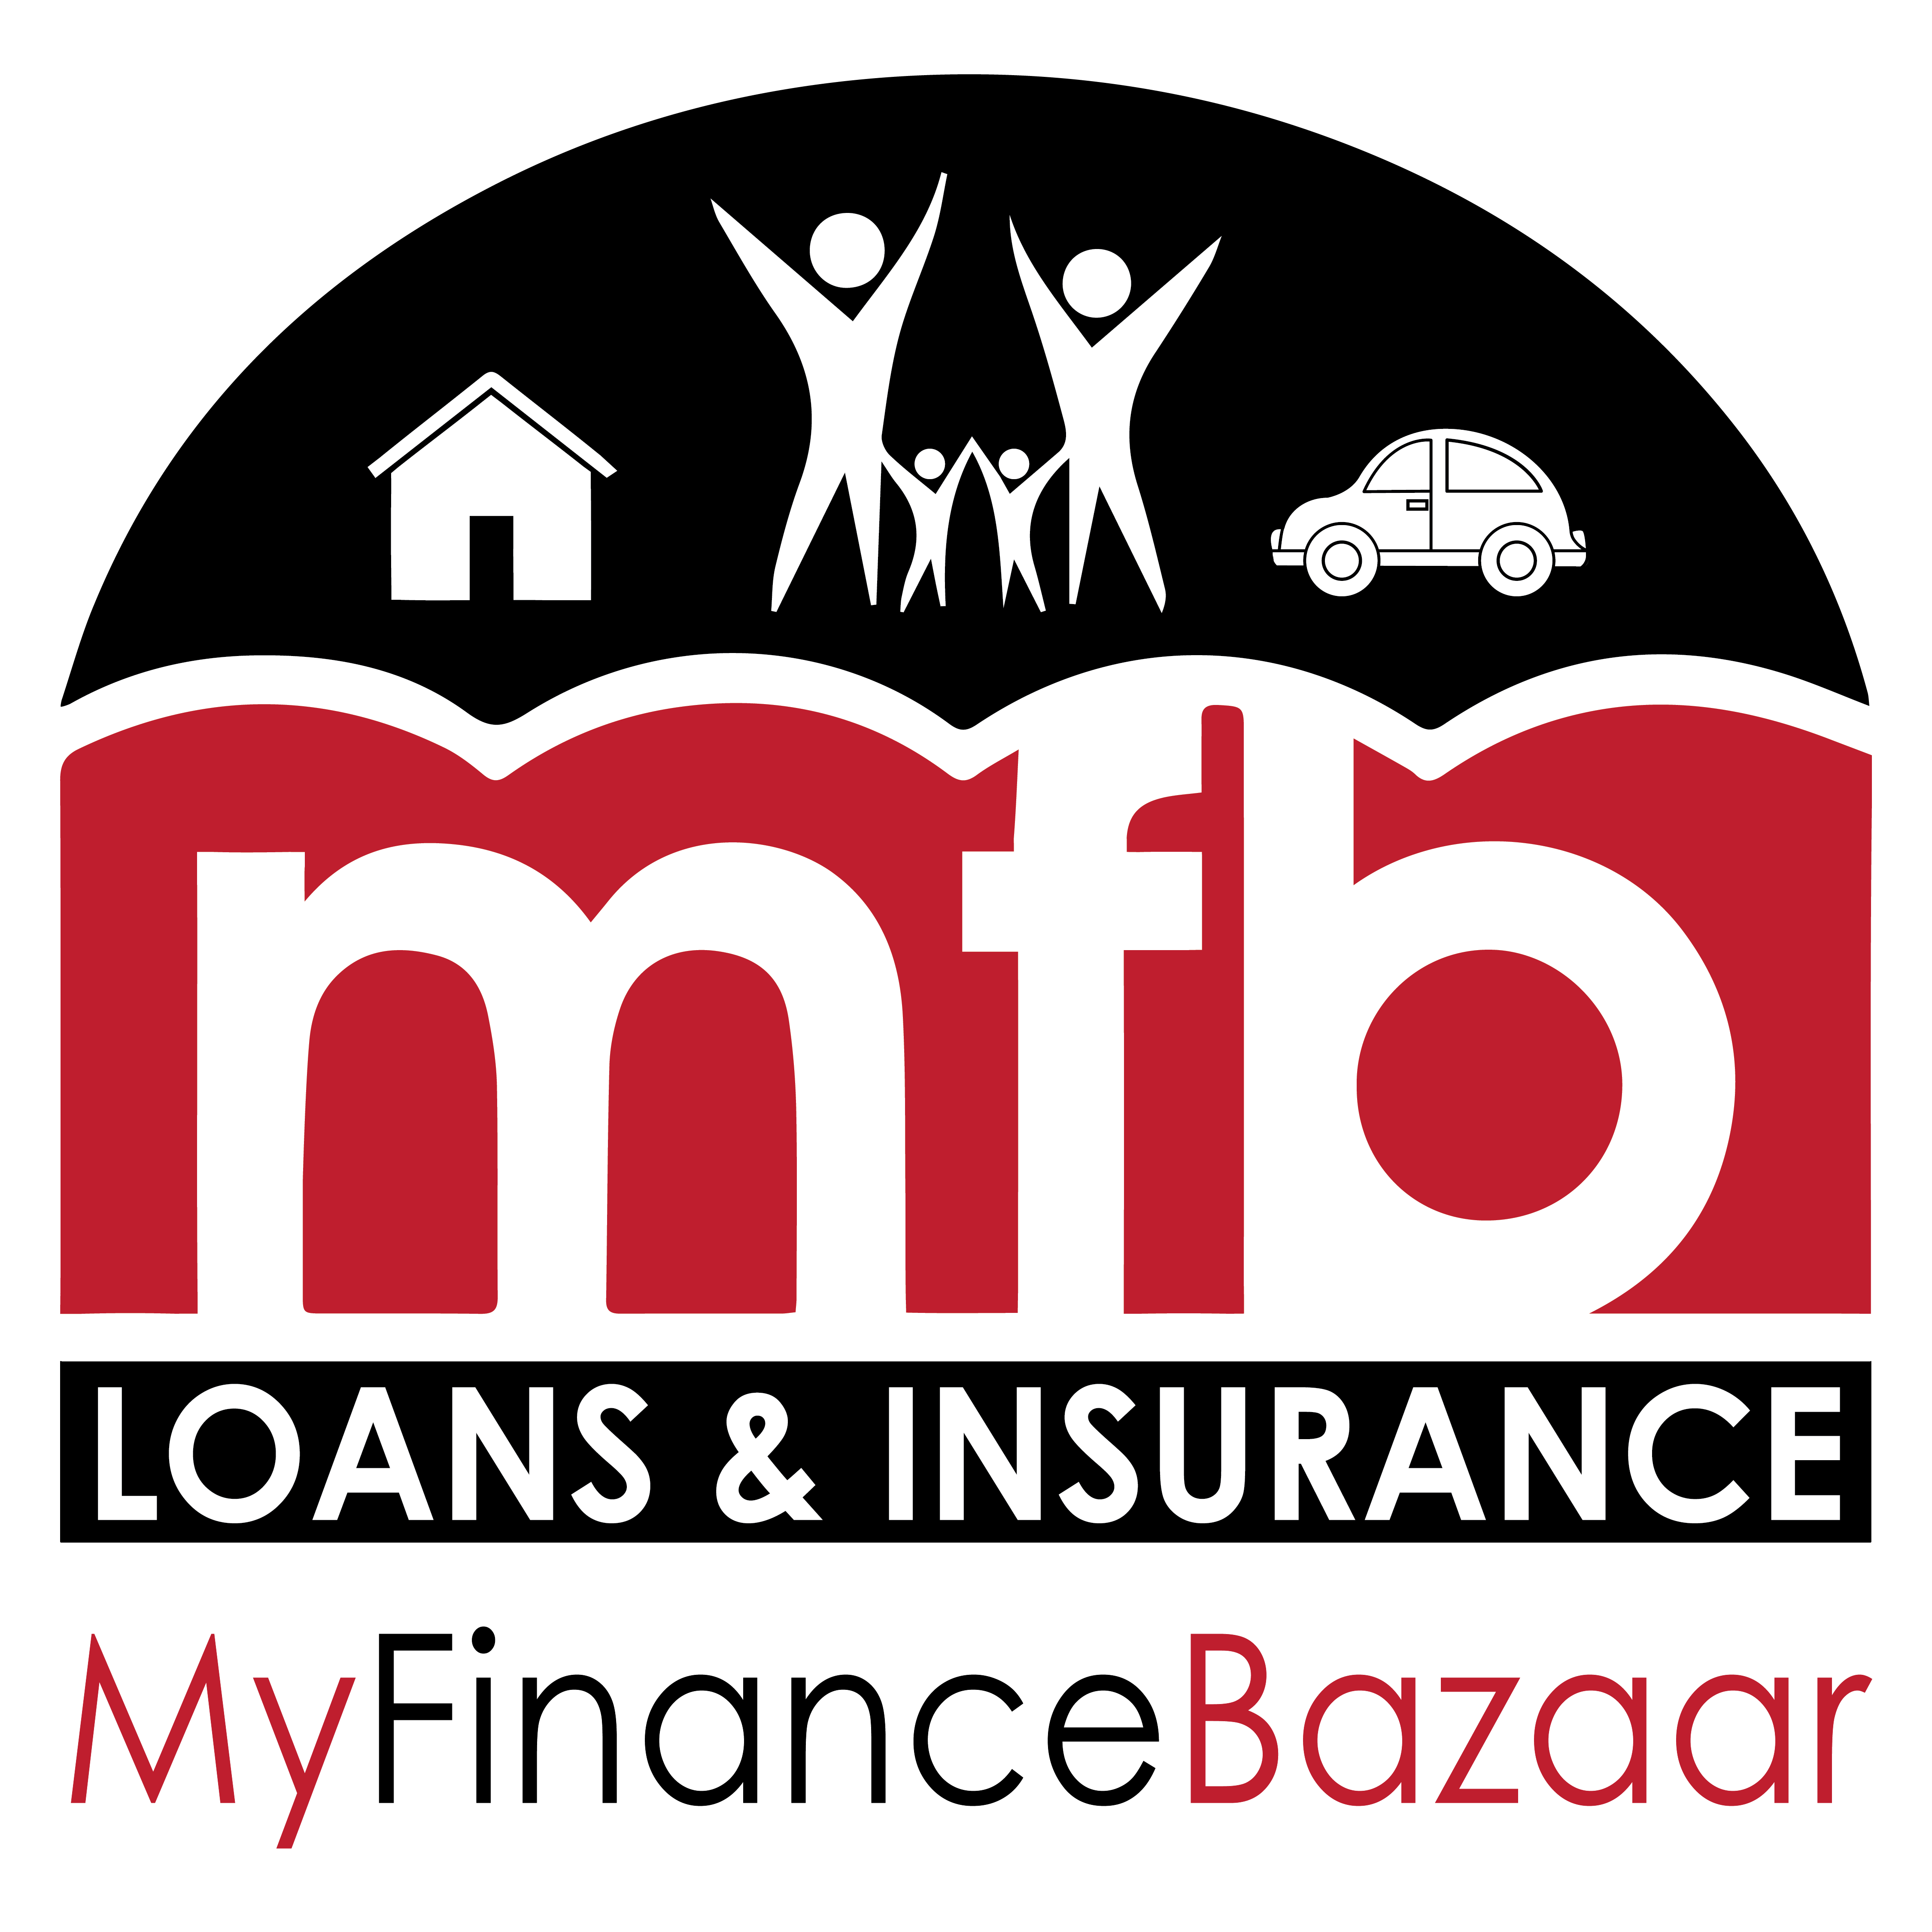 Myfinancebazaar.com